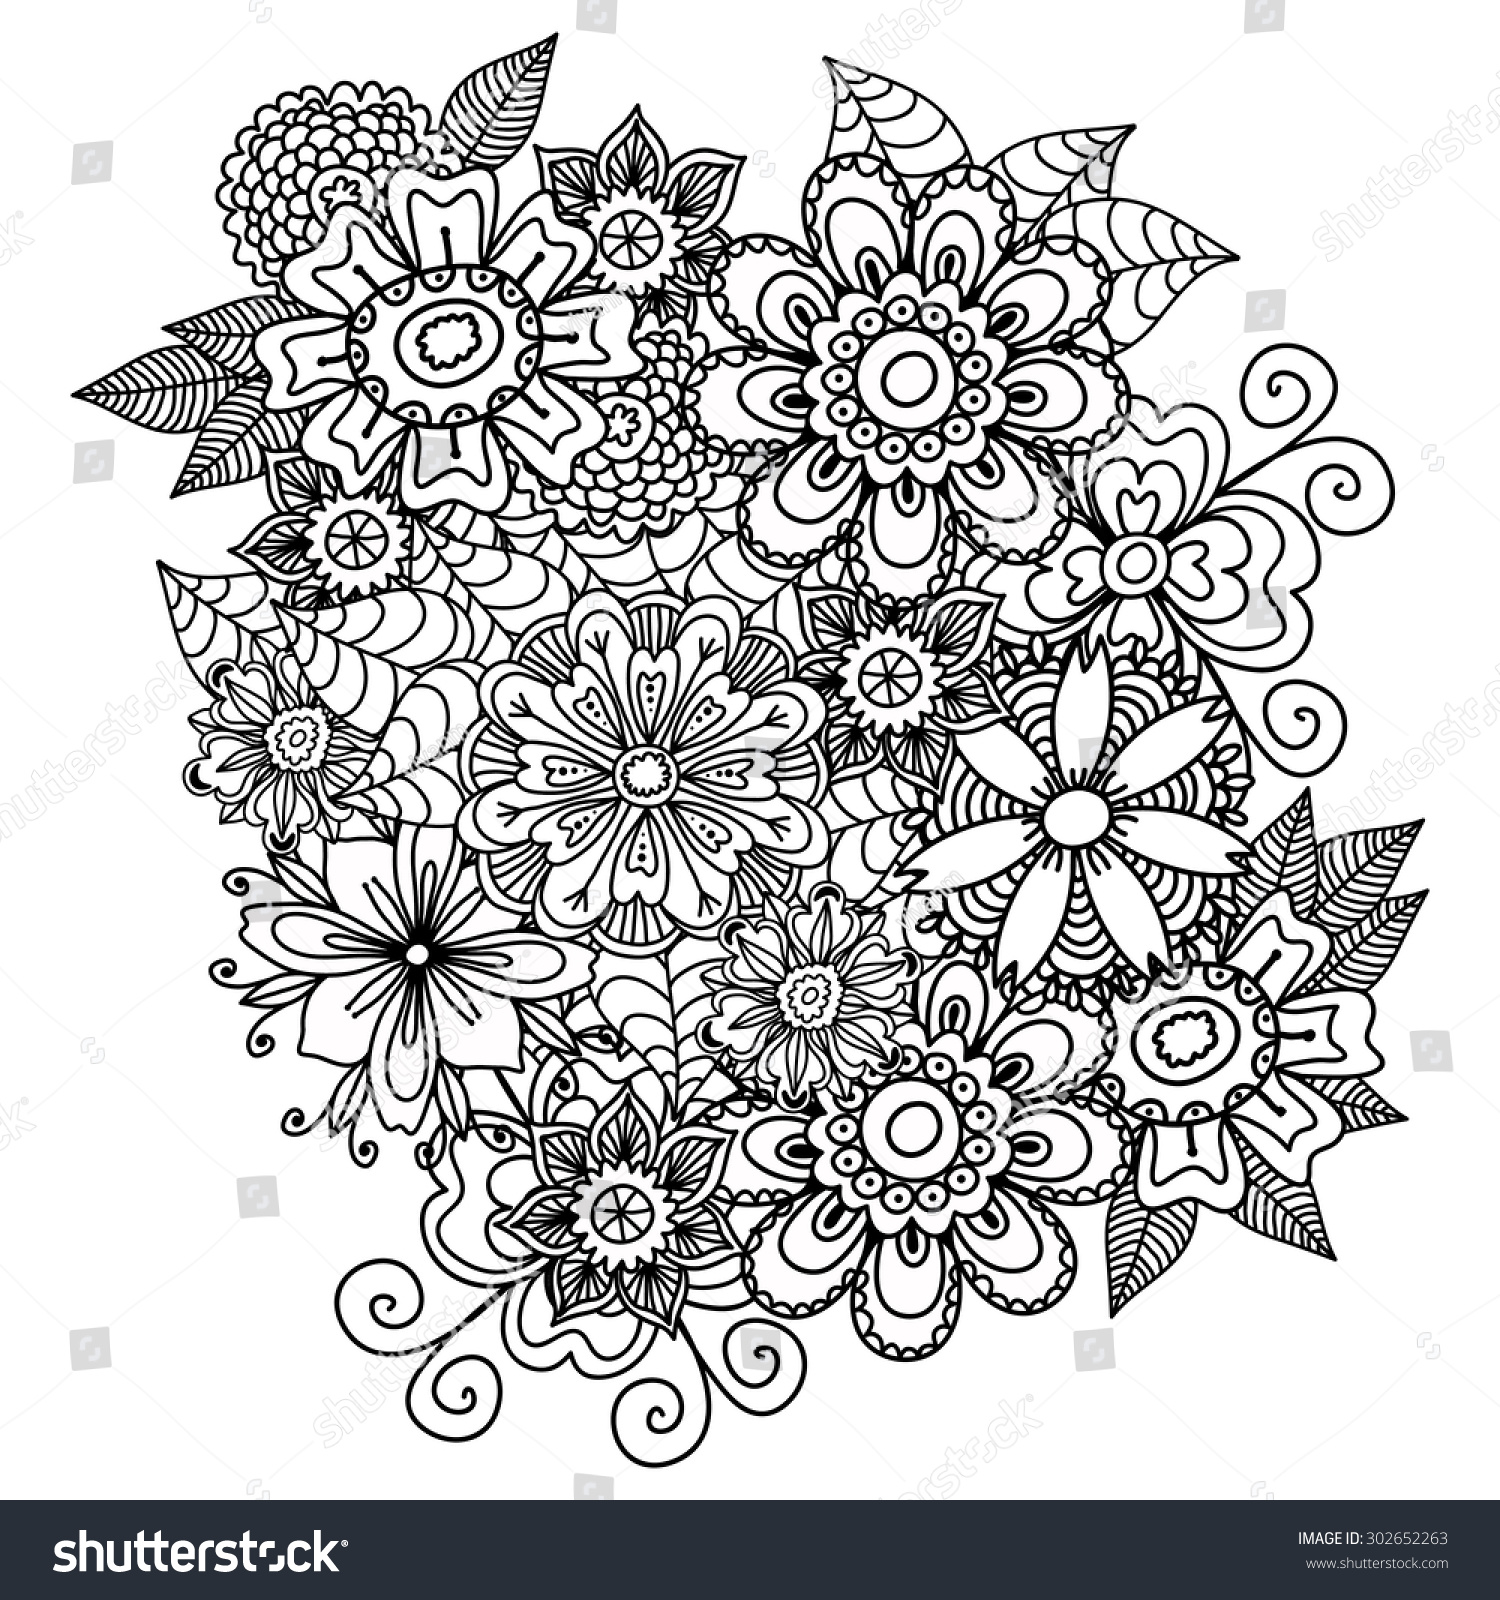 Royalty Free Beautiful Doodle Art Flowers Zentangle 302652263